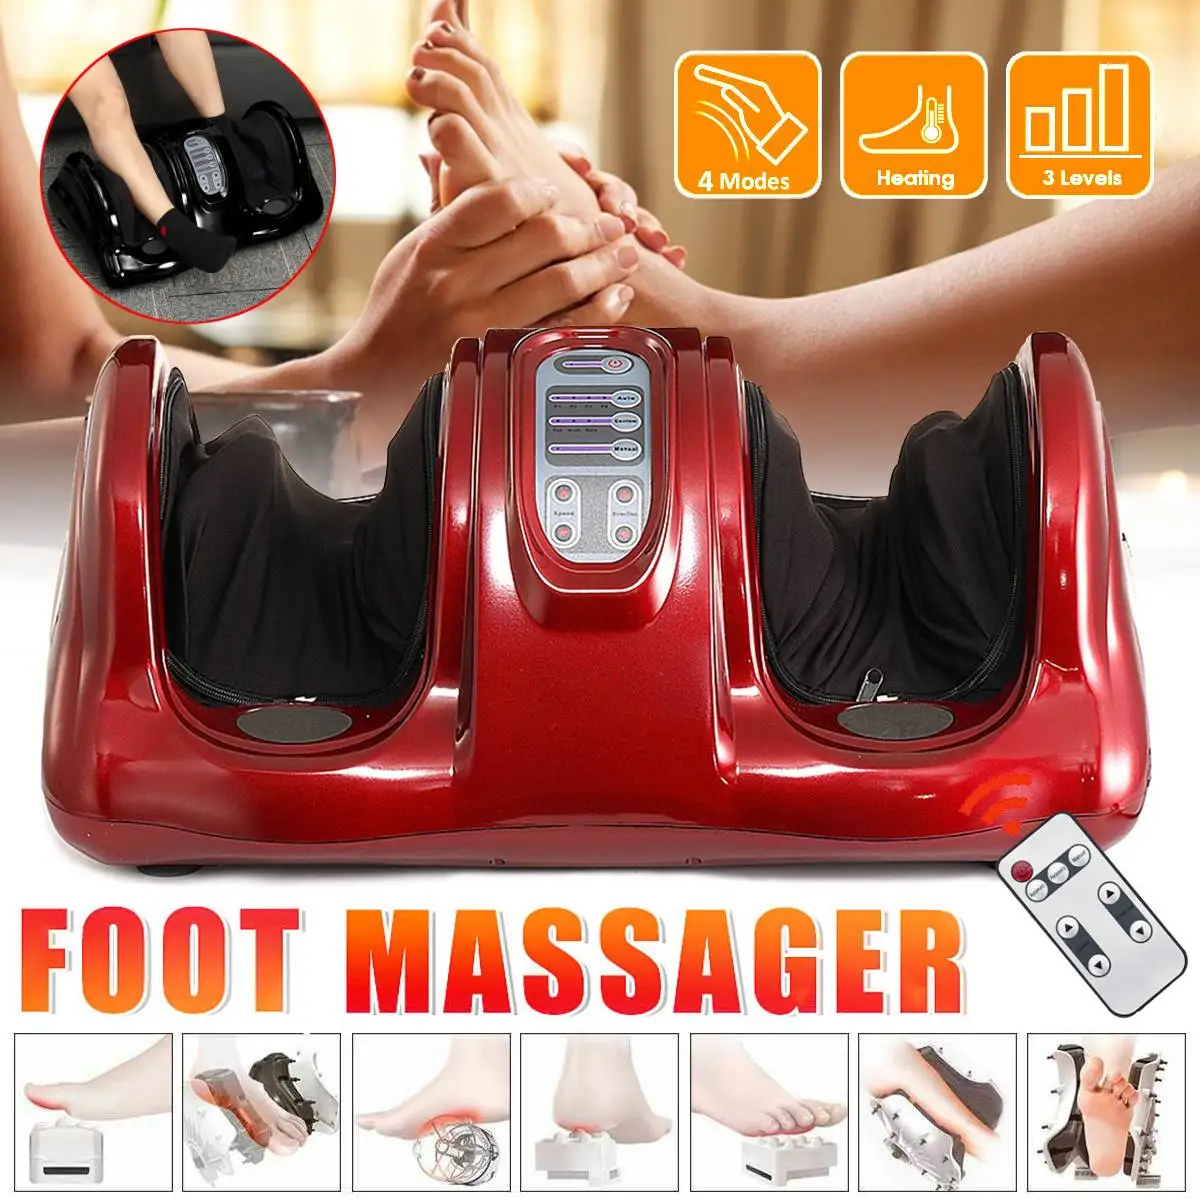 Foot Massager Machine Shiatsu Leg Massager, Therapeutic Reflexology Calf, Nerve Pain, Deep Kneading, High-Intensity Rollers